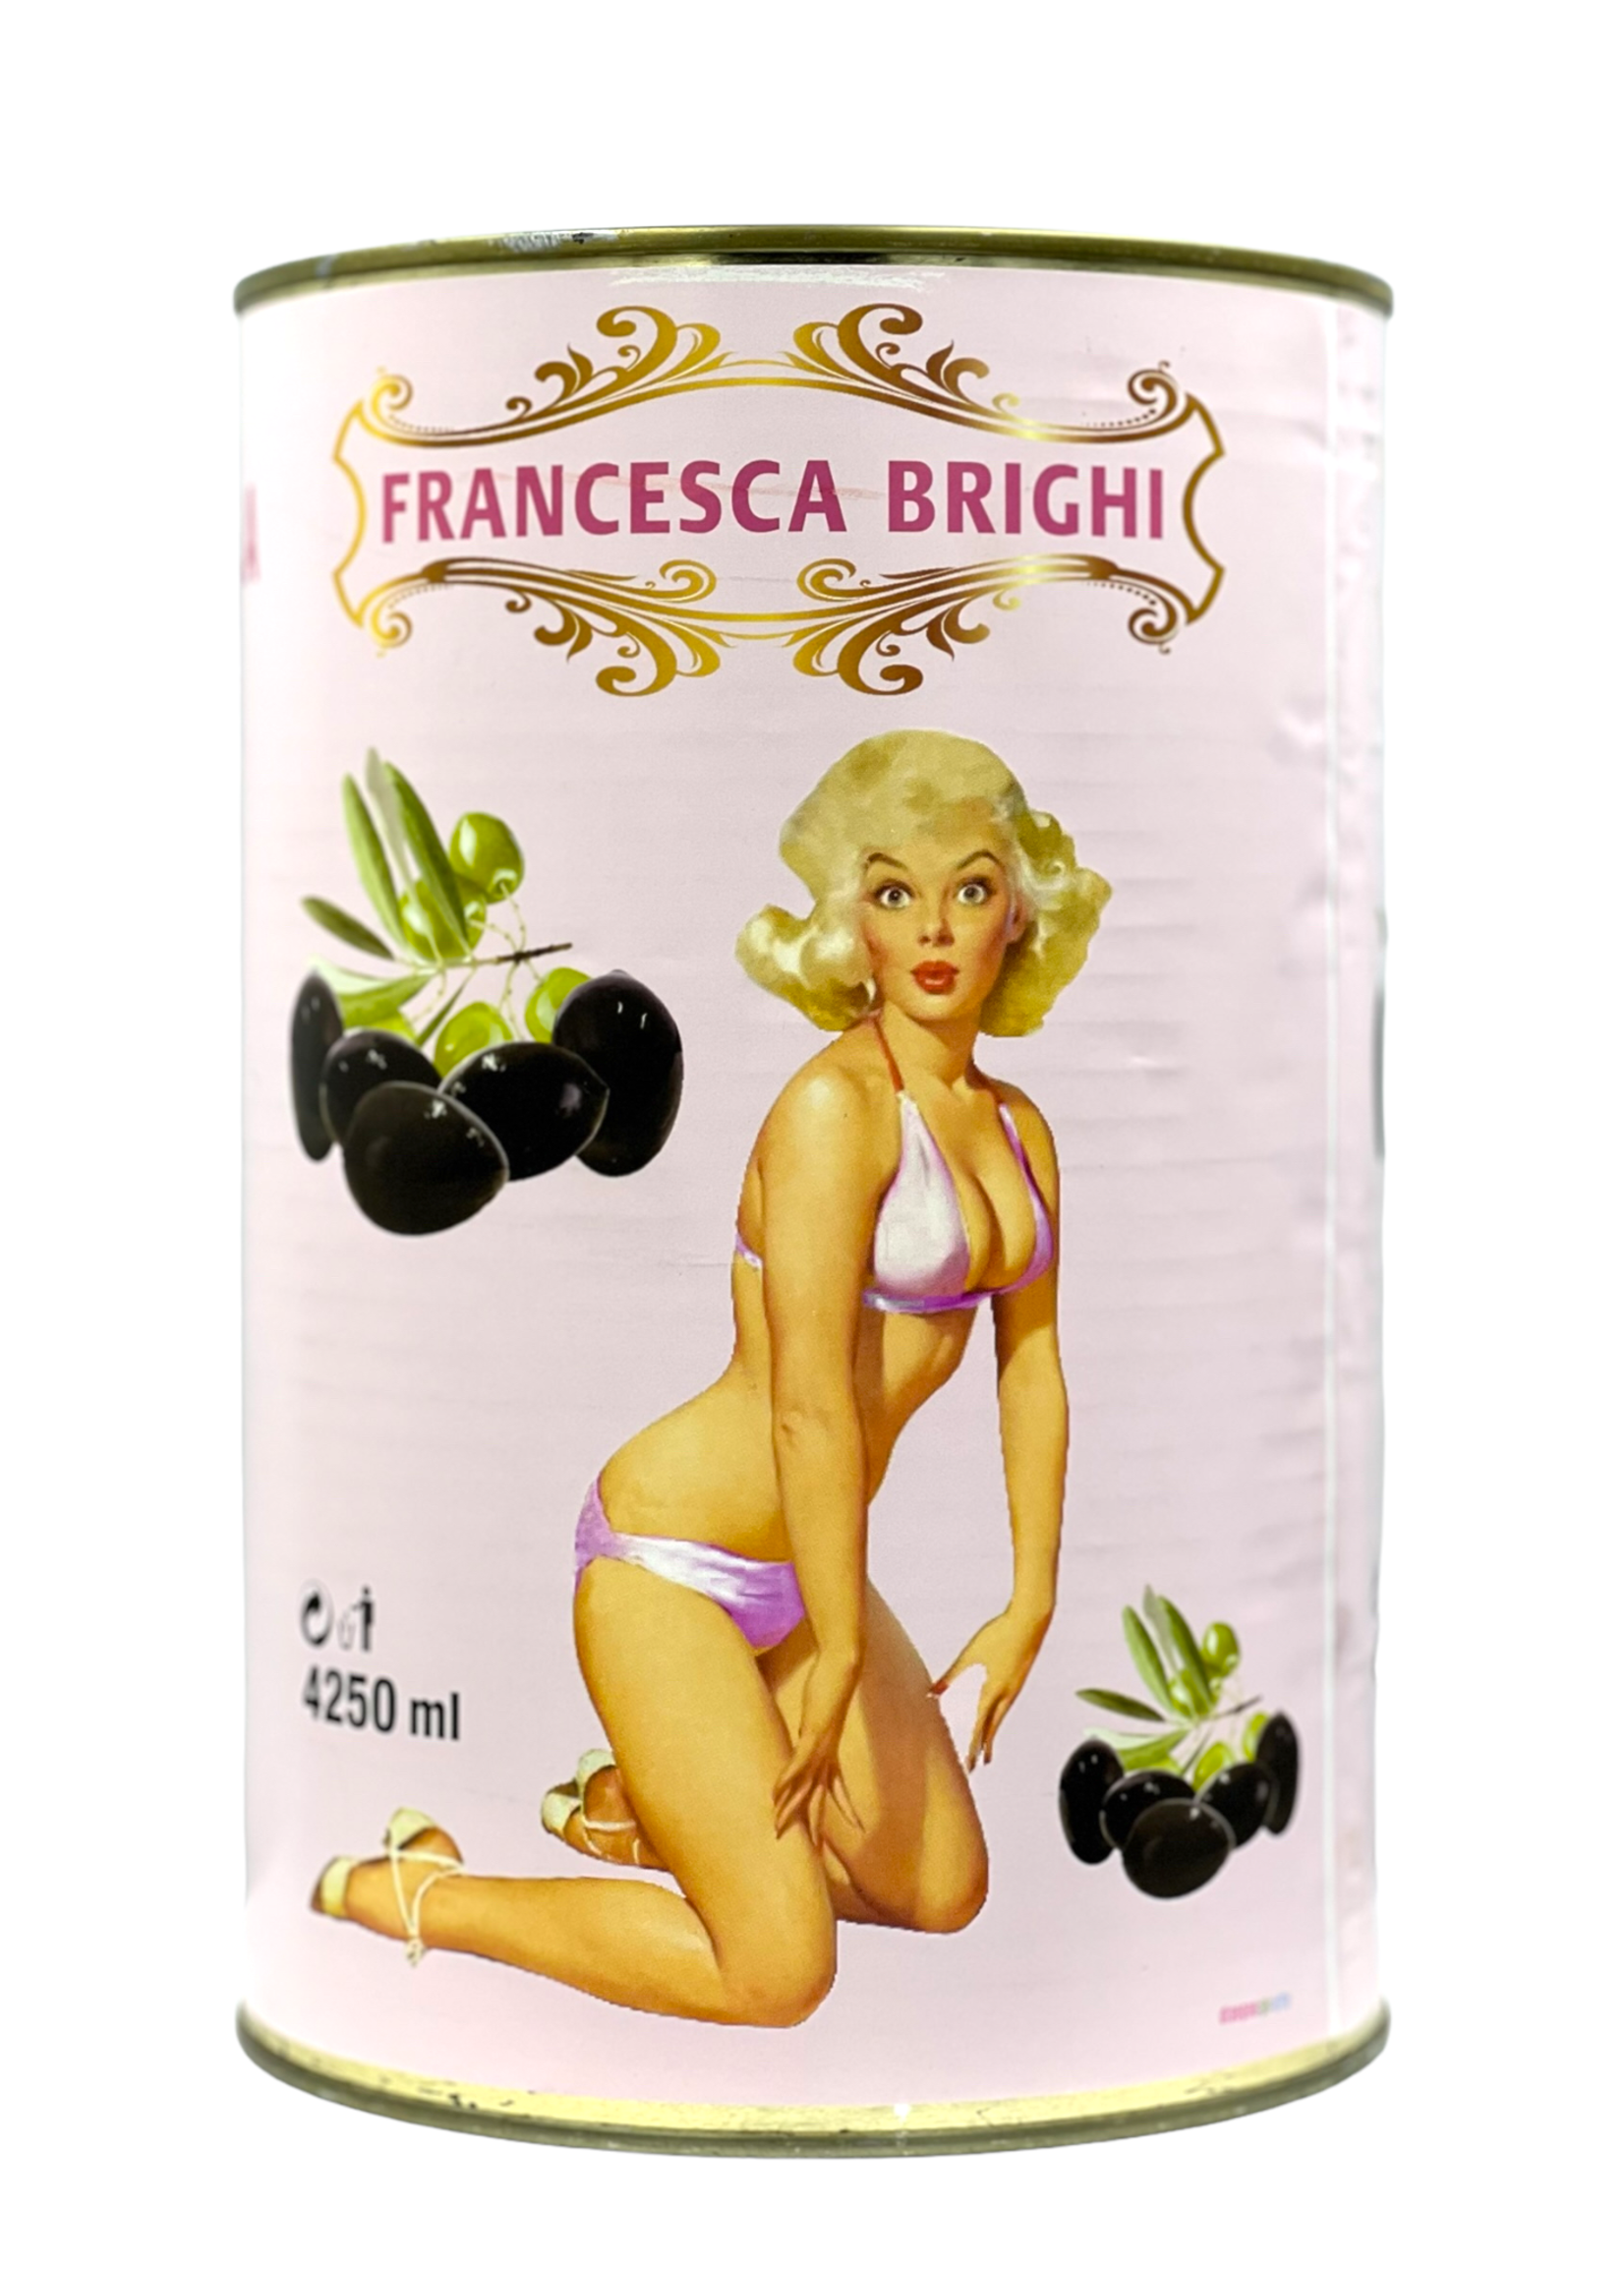 Olive nere Bella di Cerignola 4200g - Francesca Brighi